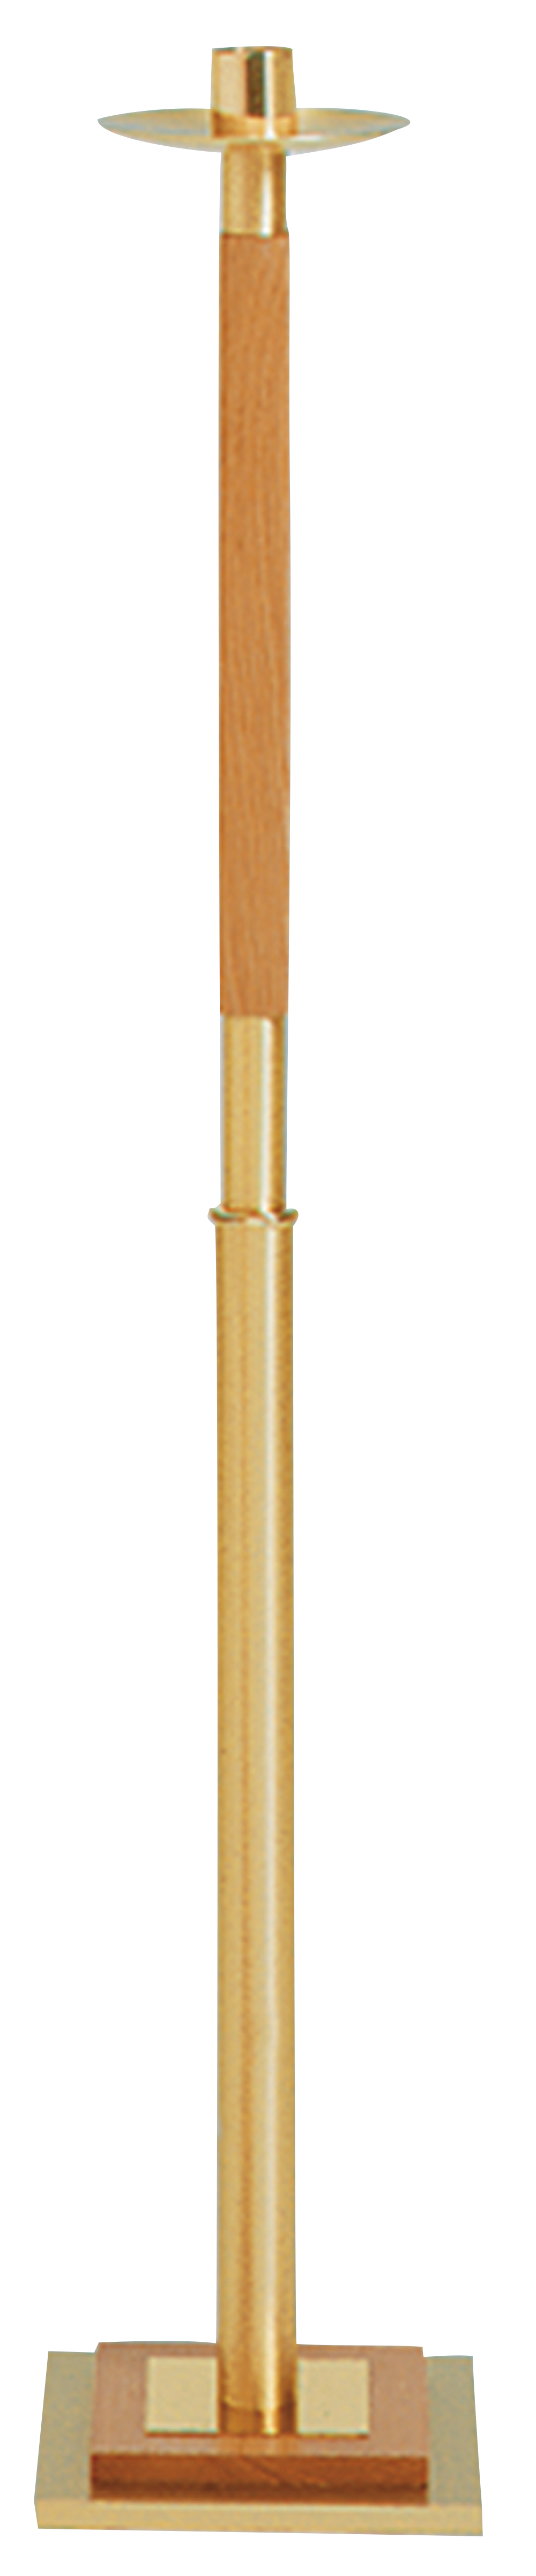 K131 Processional Candlestick